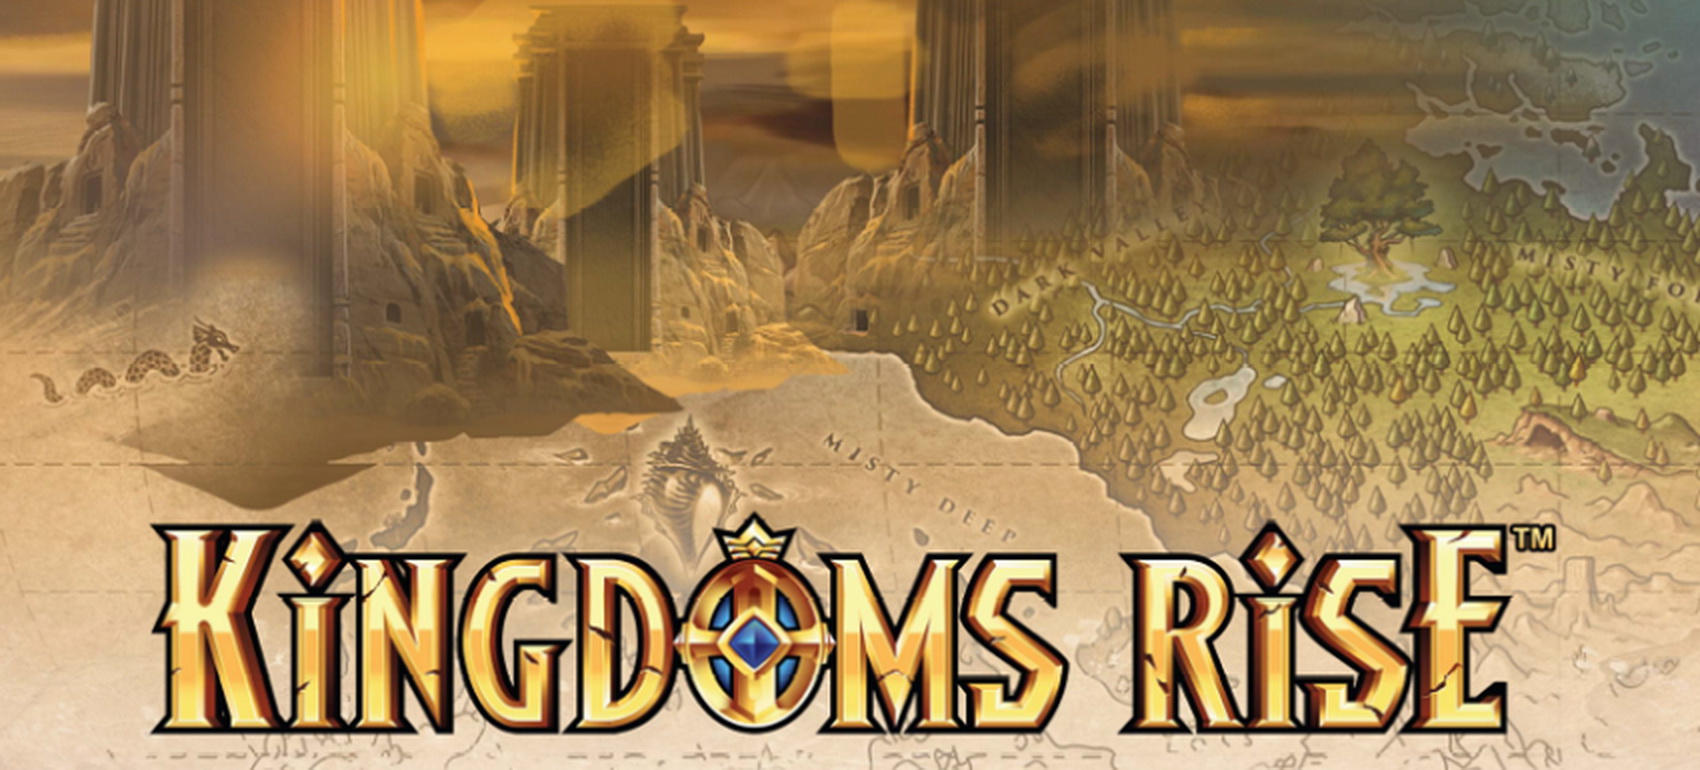 The Kingdoms Rise Live Blackjack Online Slot Demo Game by Playtech